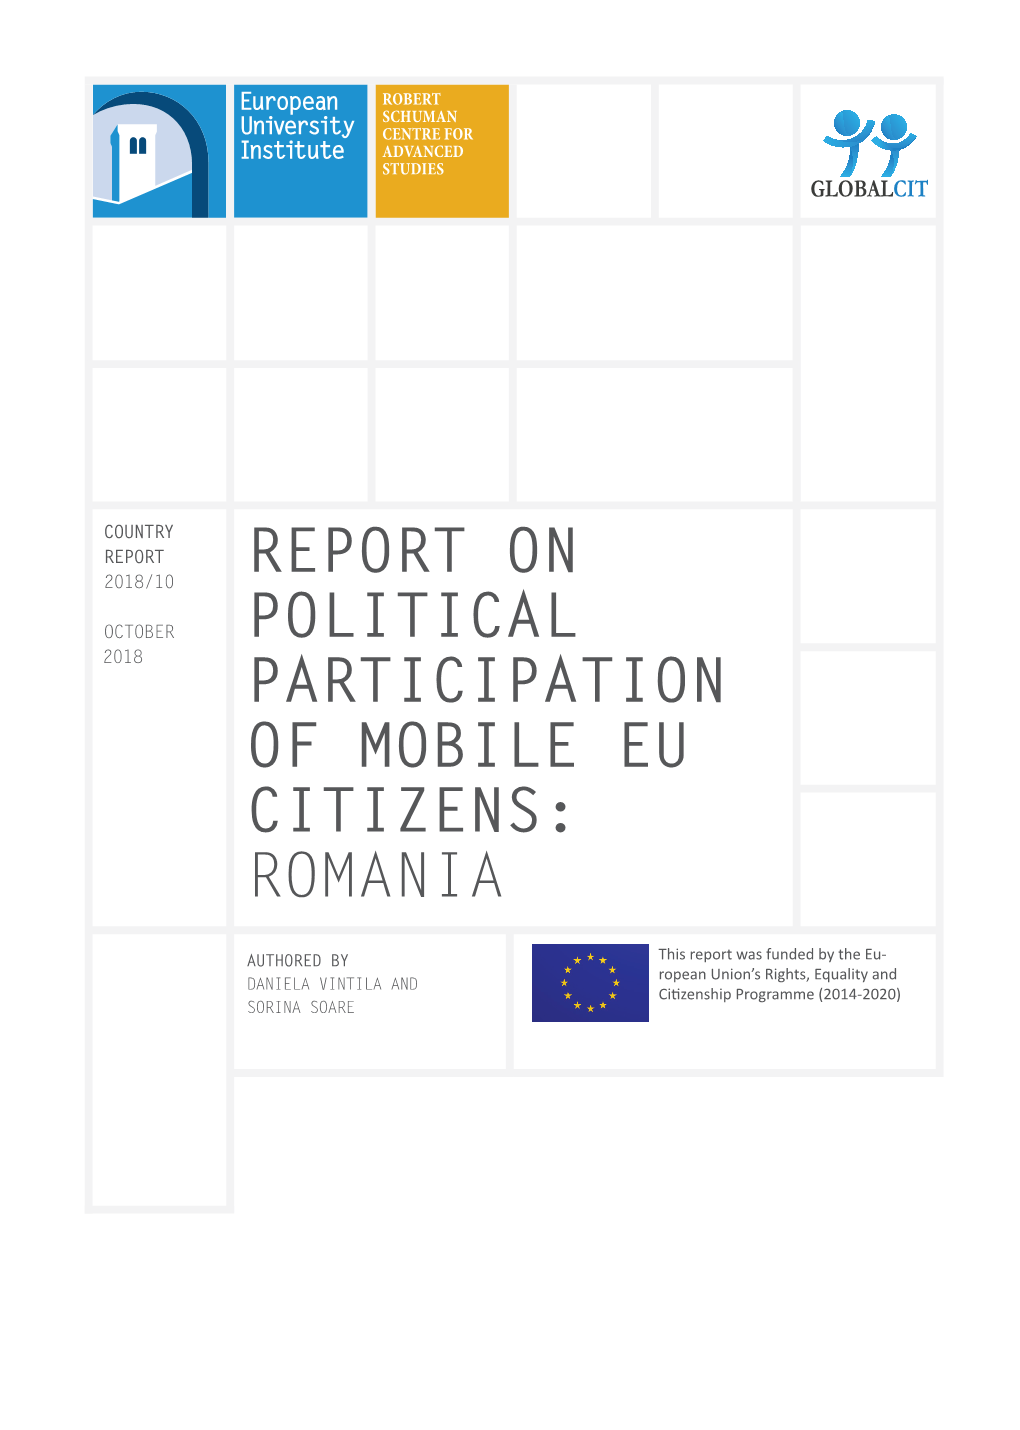 Report on Political Participation of Mobile EU Citizens: Romania RSCAS/GLOBALCIT-PP 2018/10 October 2018